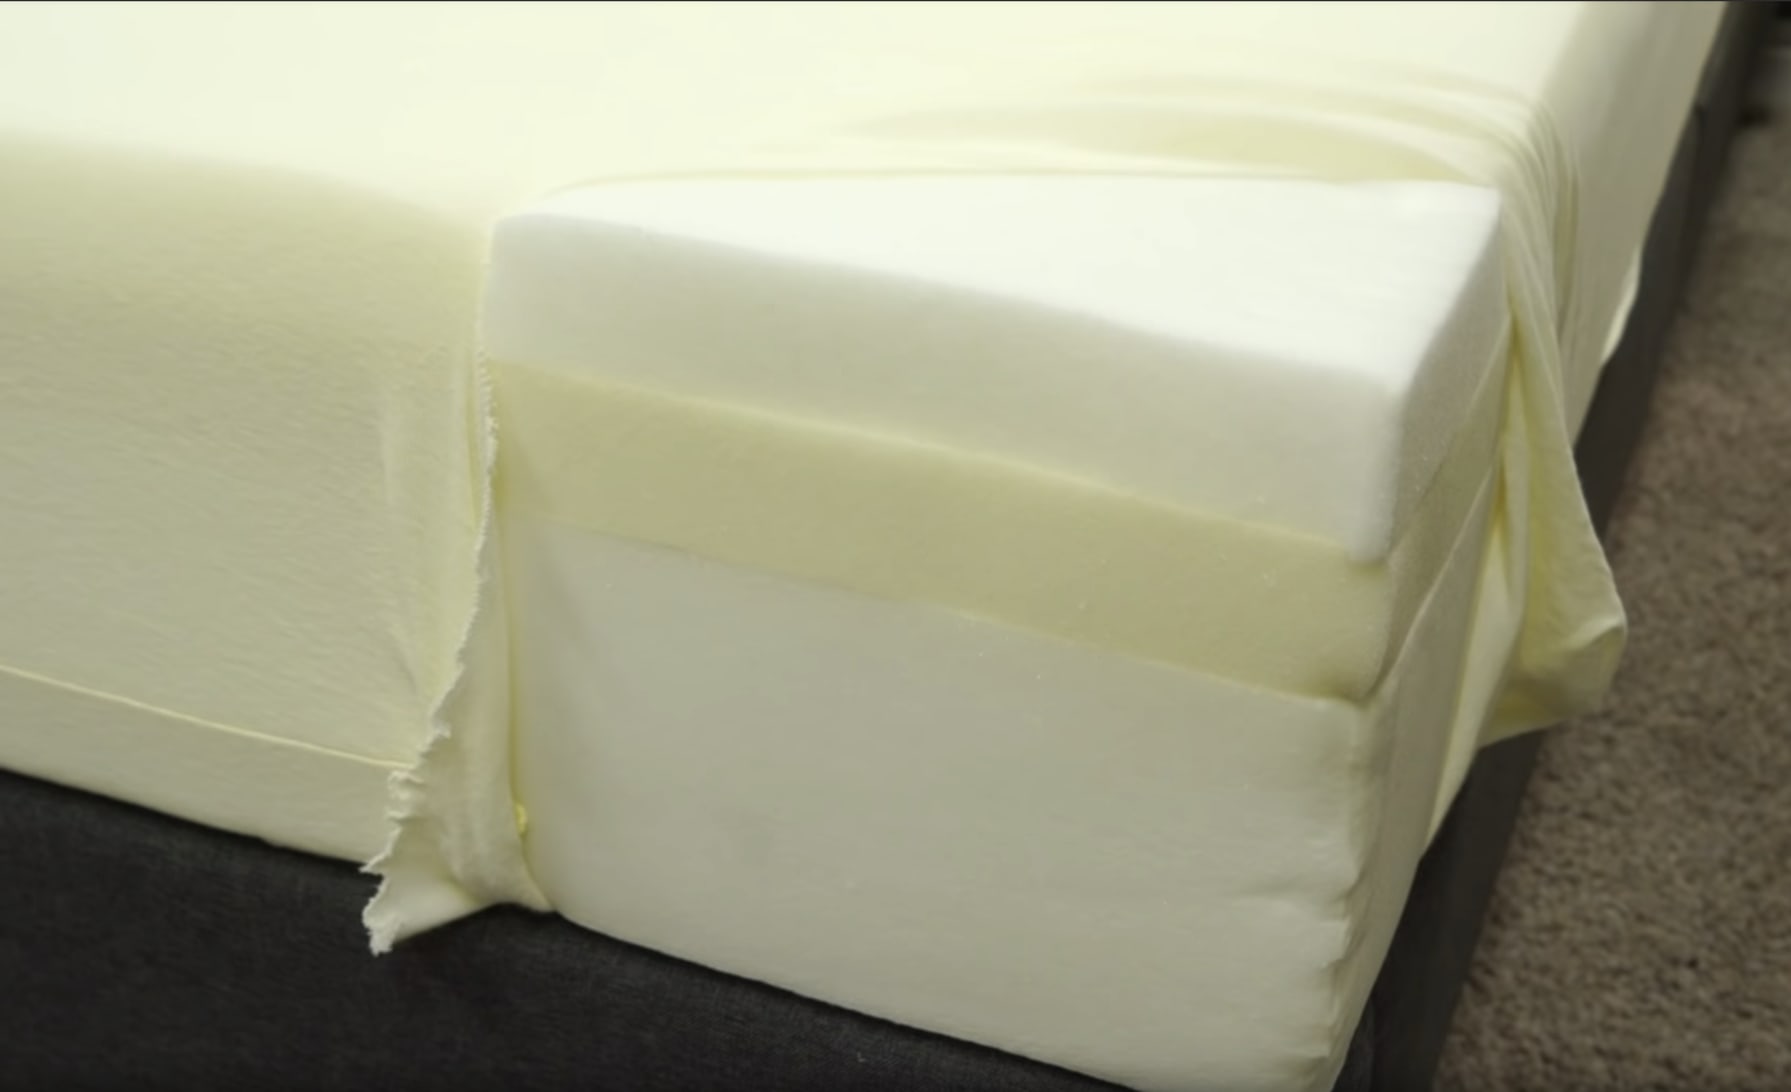 pronlems with leesa mattresses